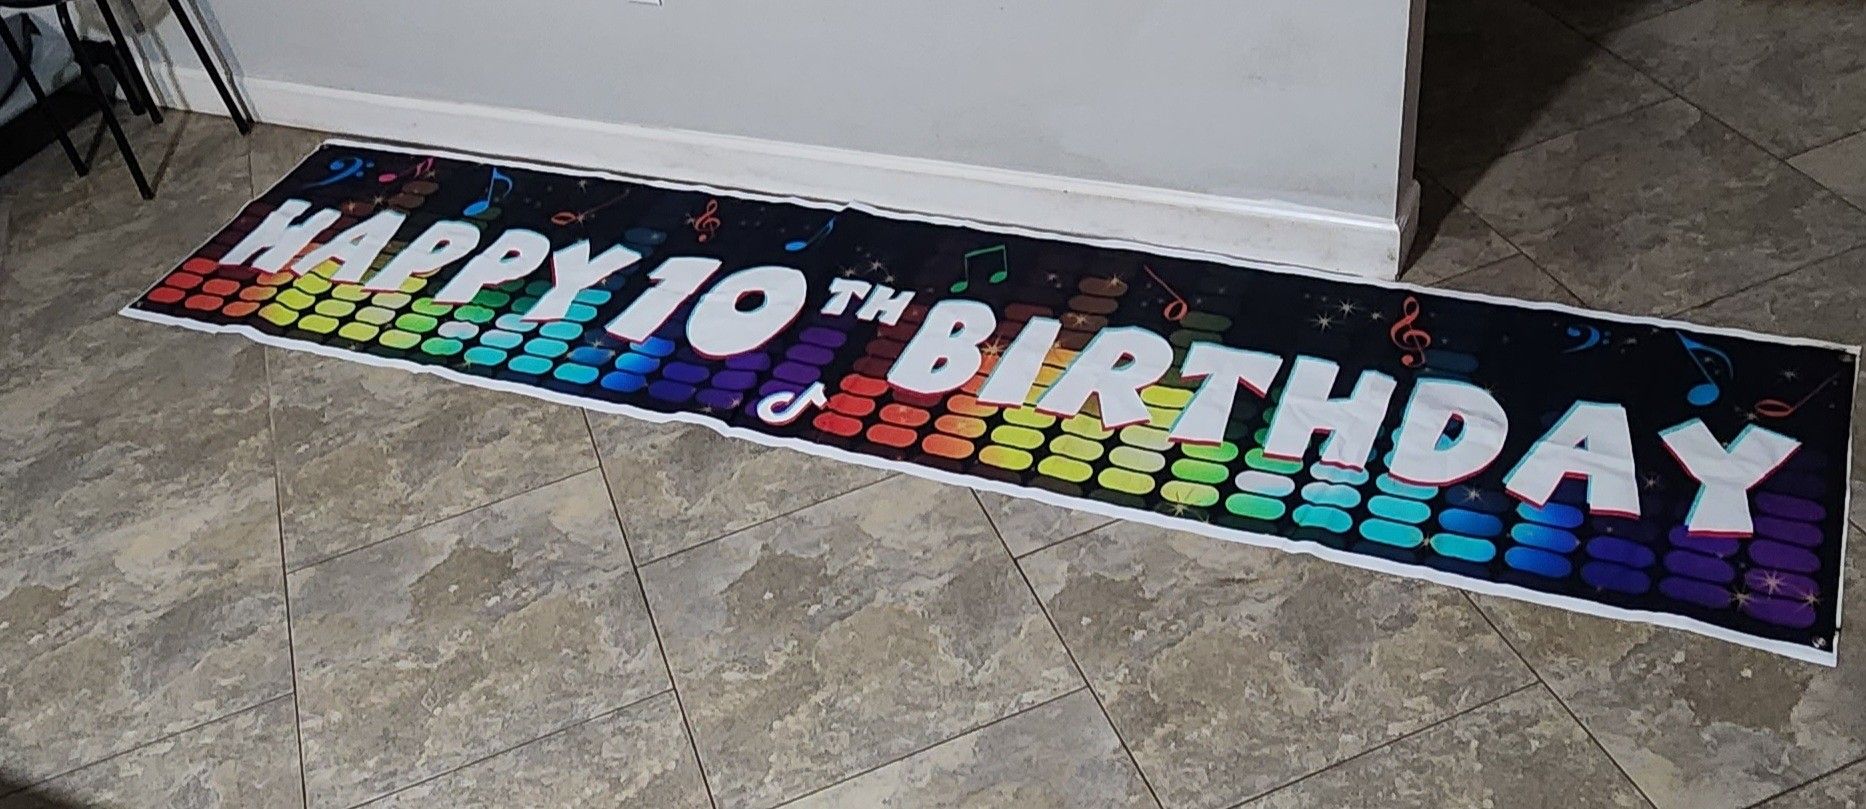 Happy 10th Birthday Banner 